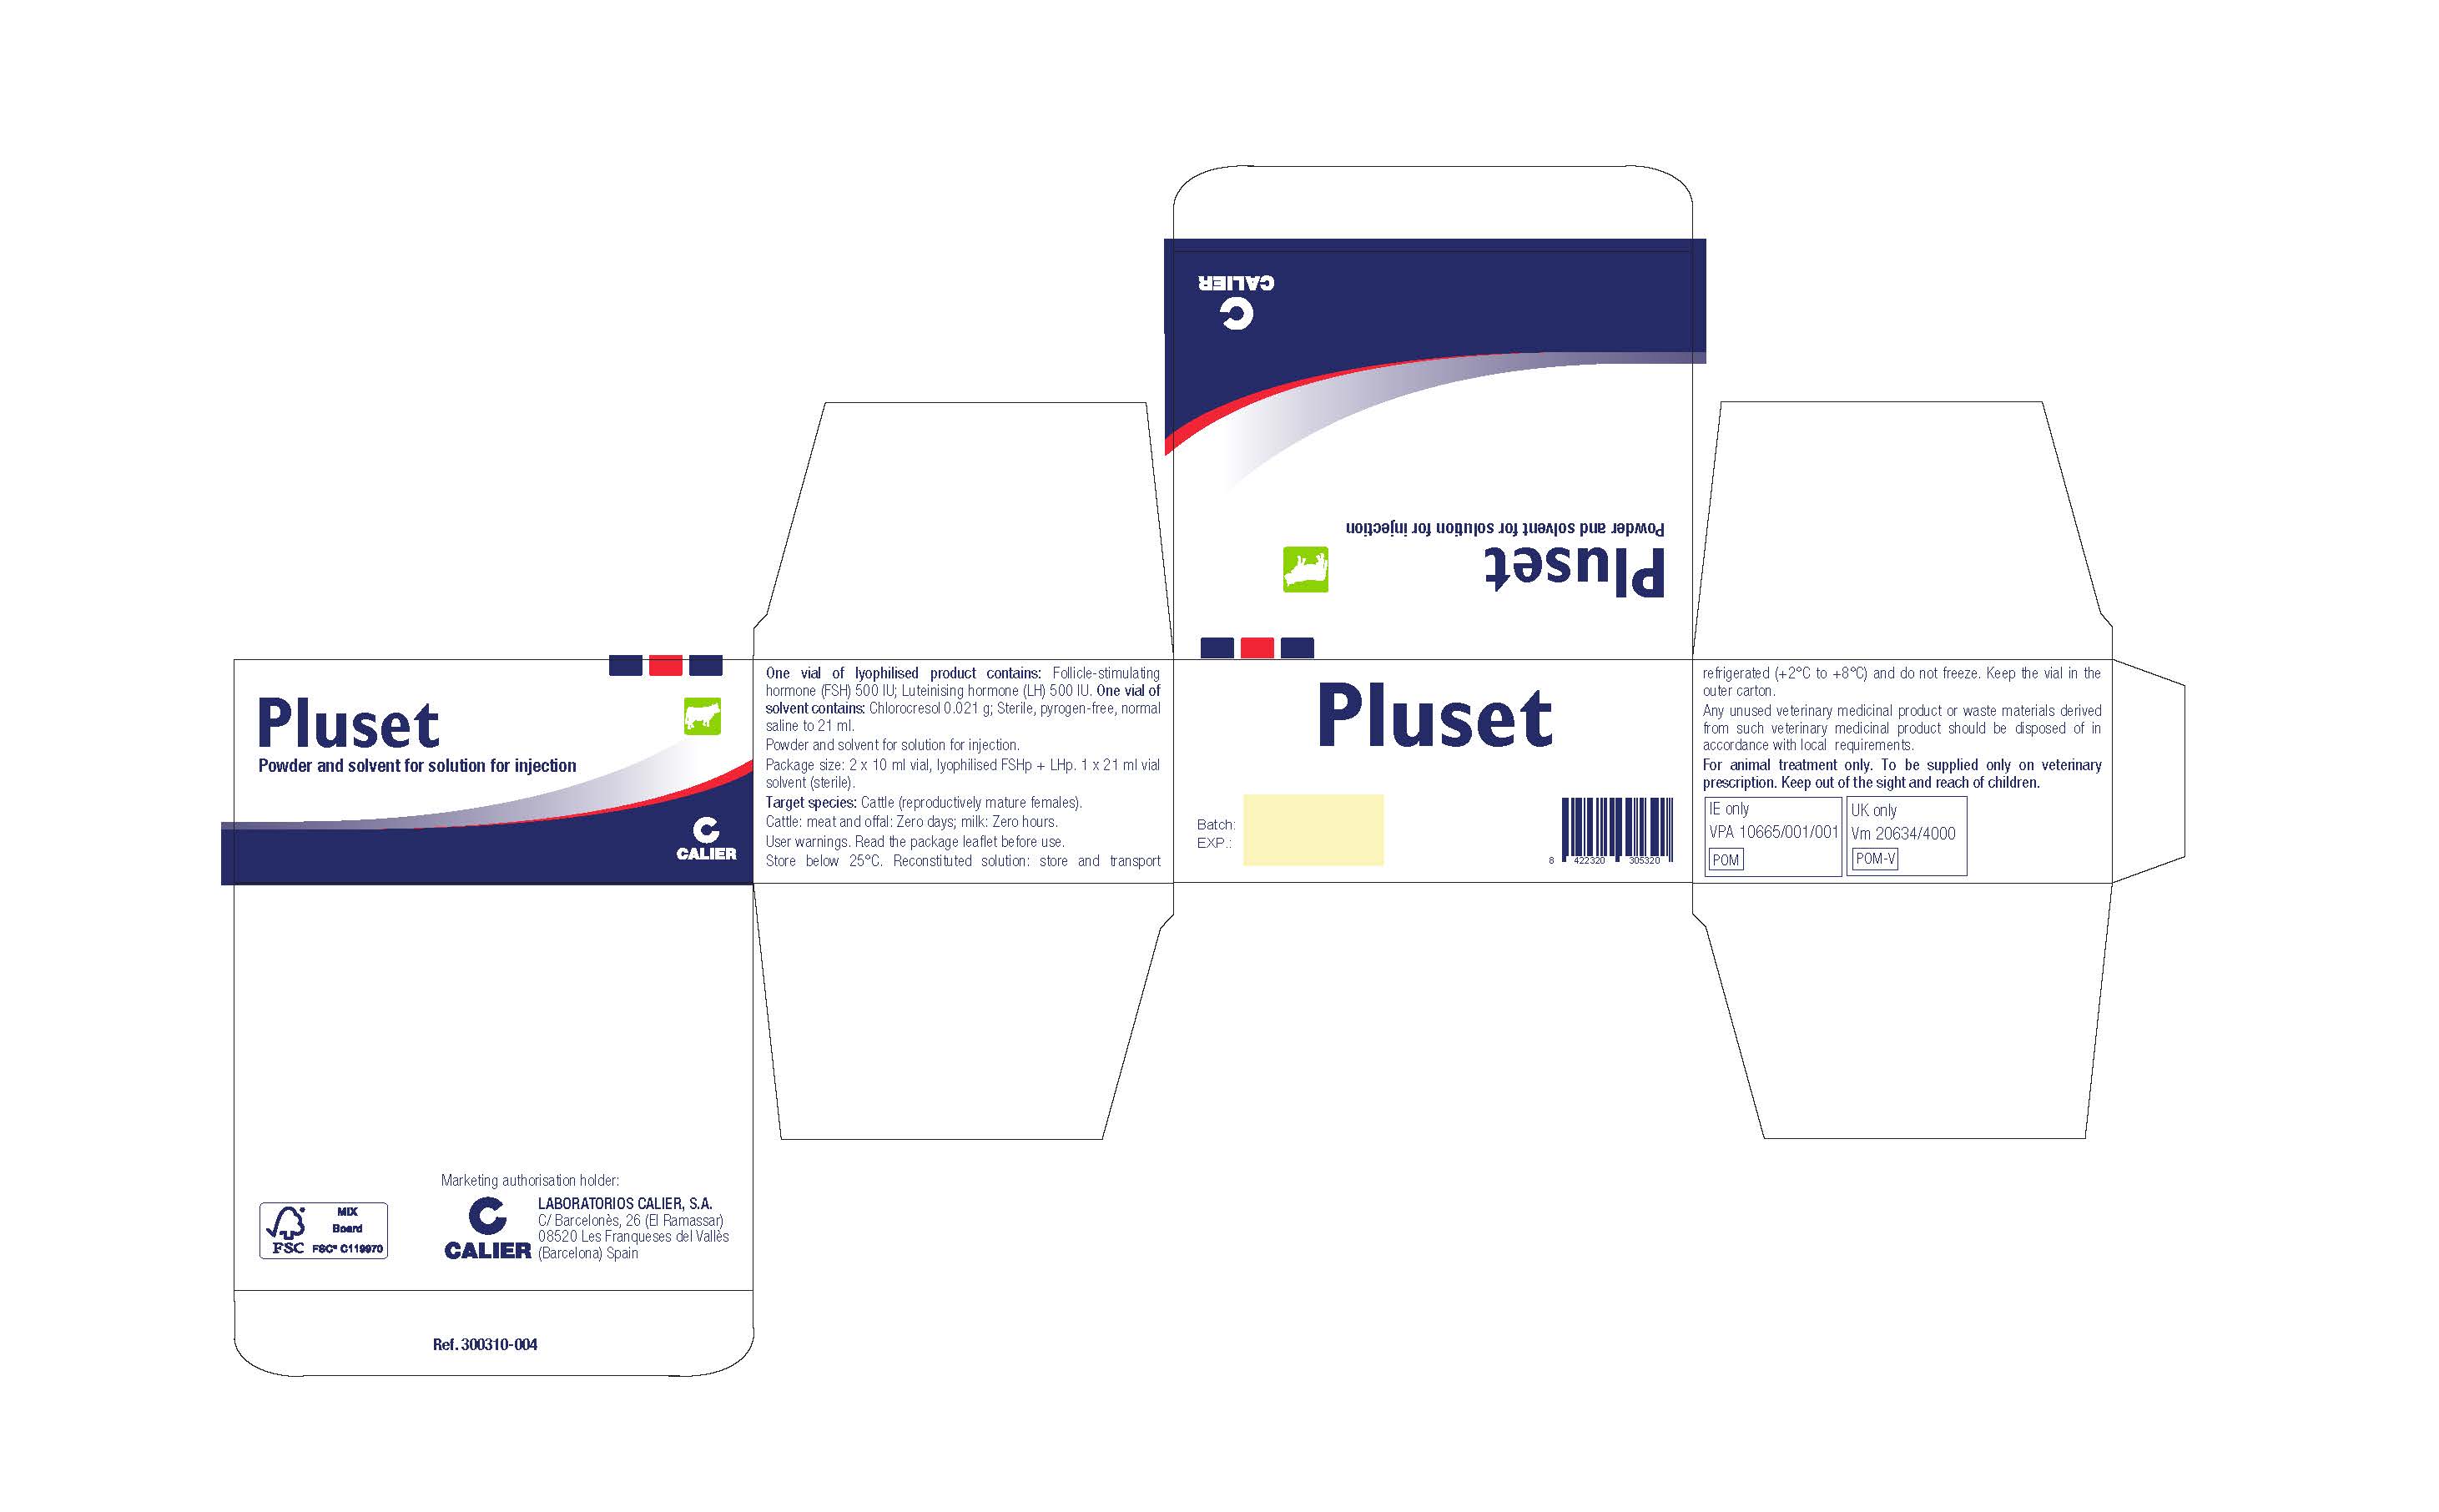 PLUSET Carton Label